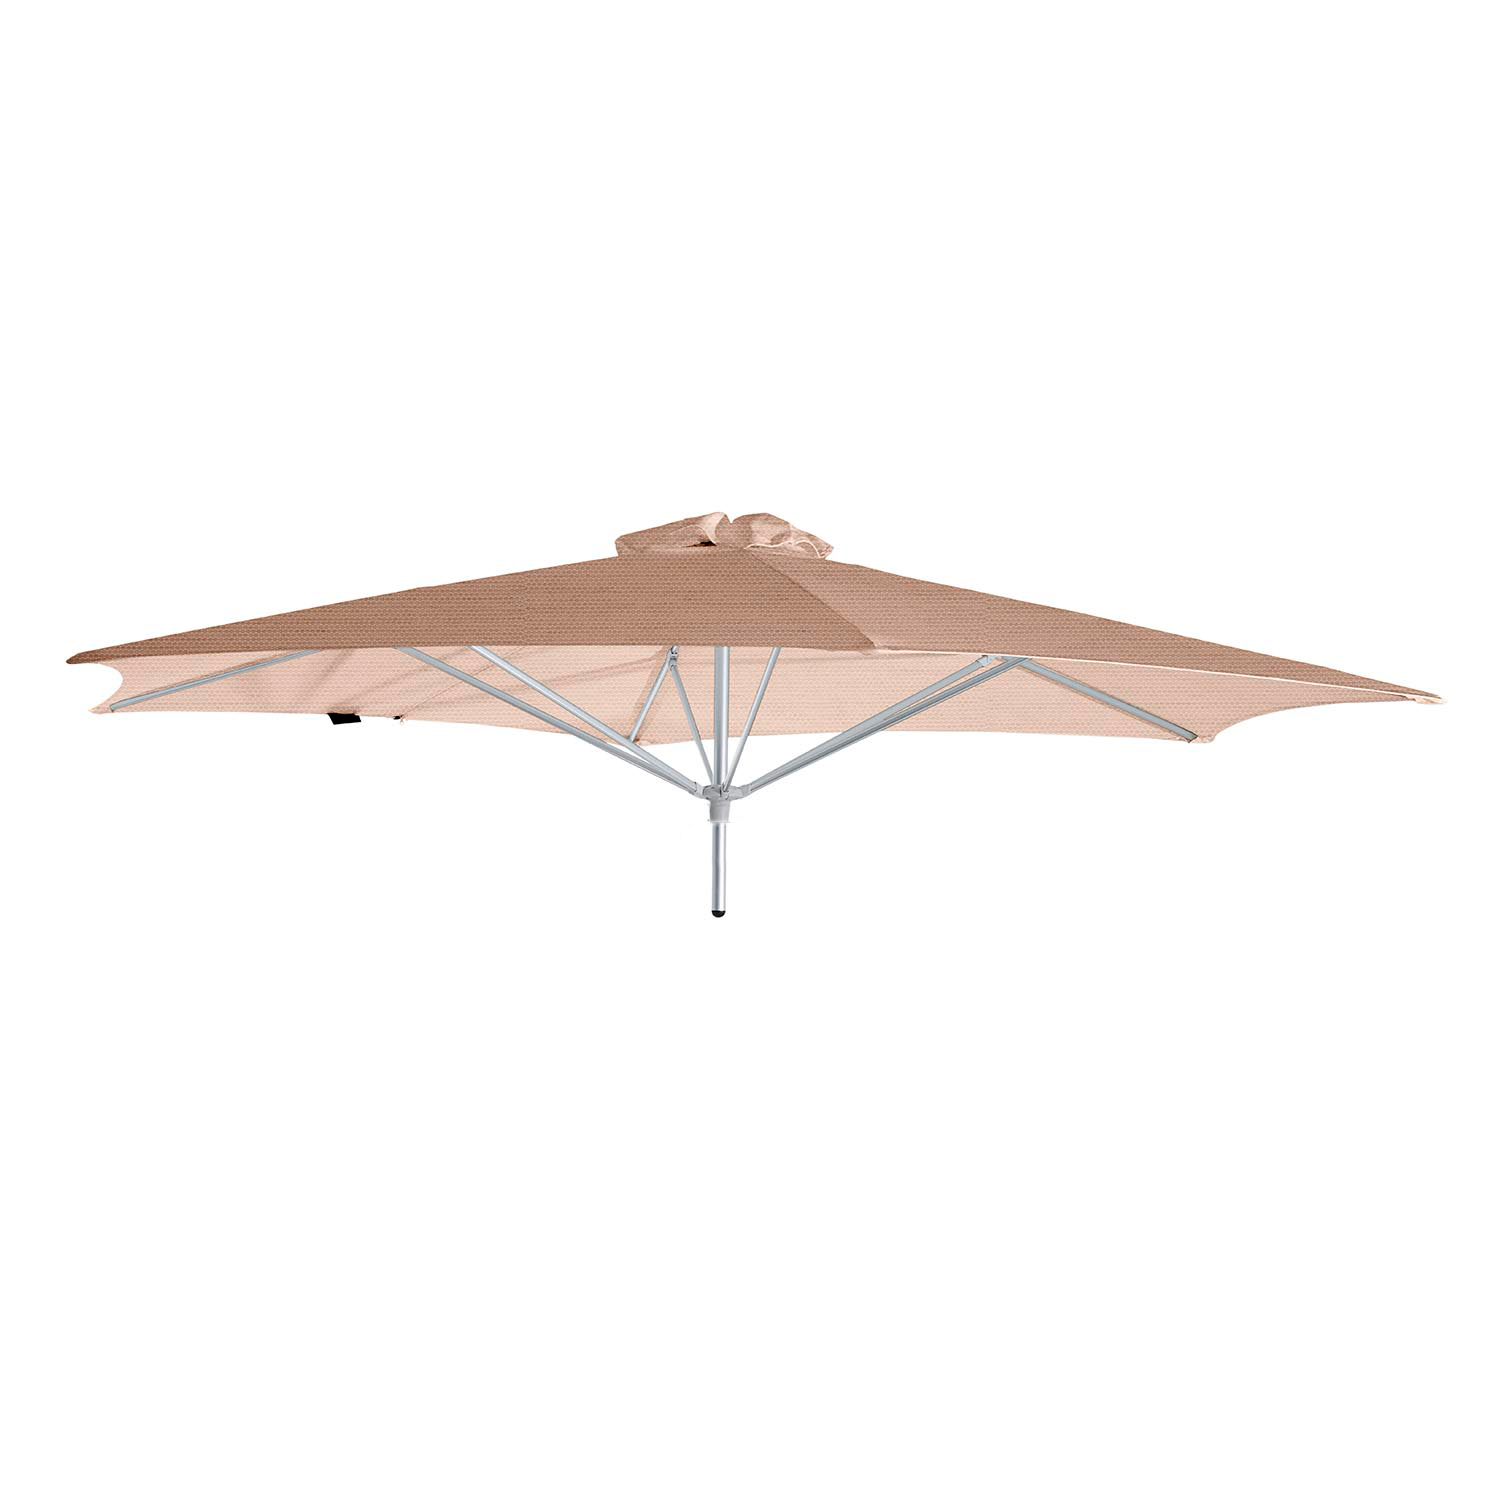 Paraflex Neo parasolkap 300cm - Sunbrella (Blush)